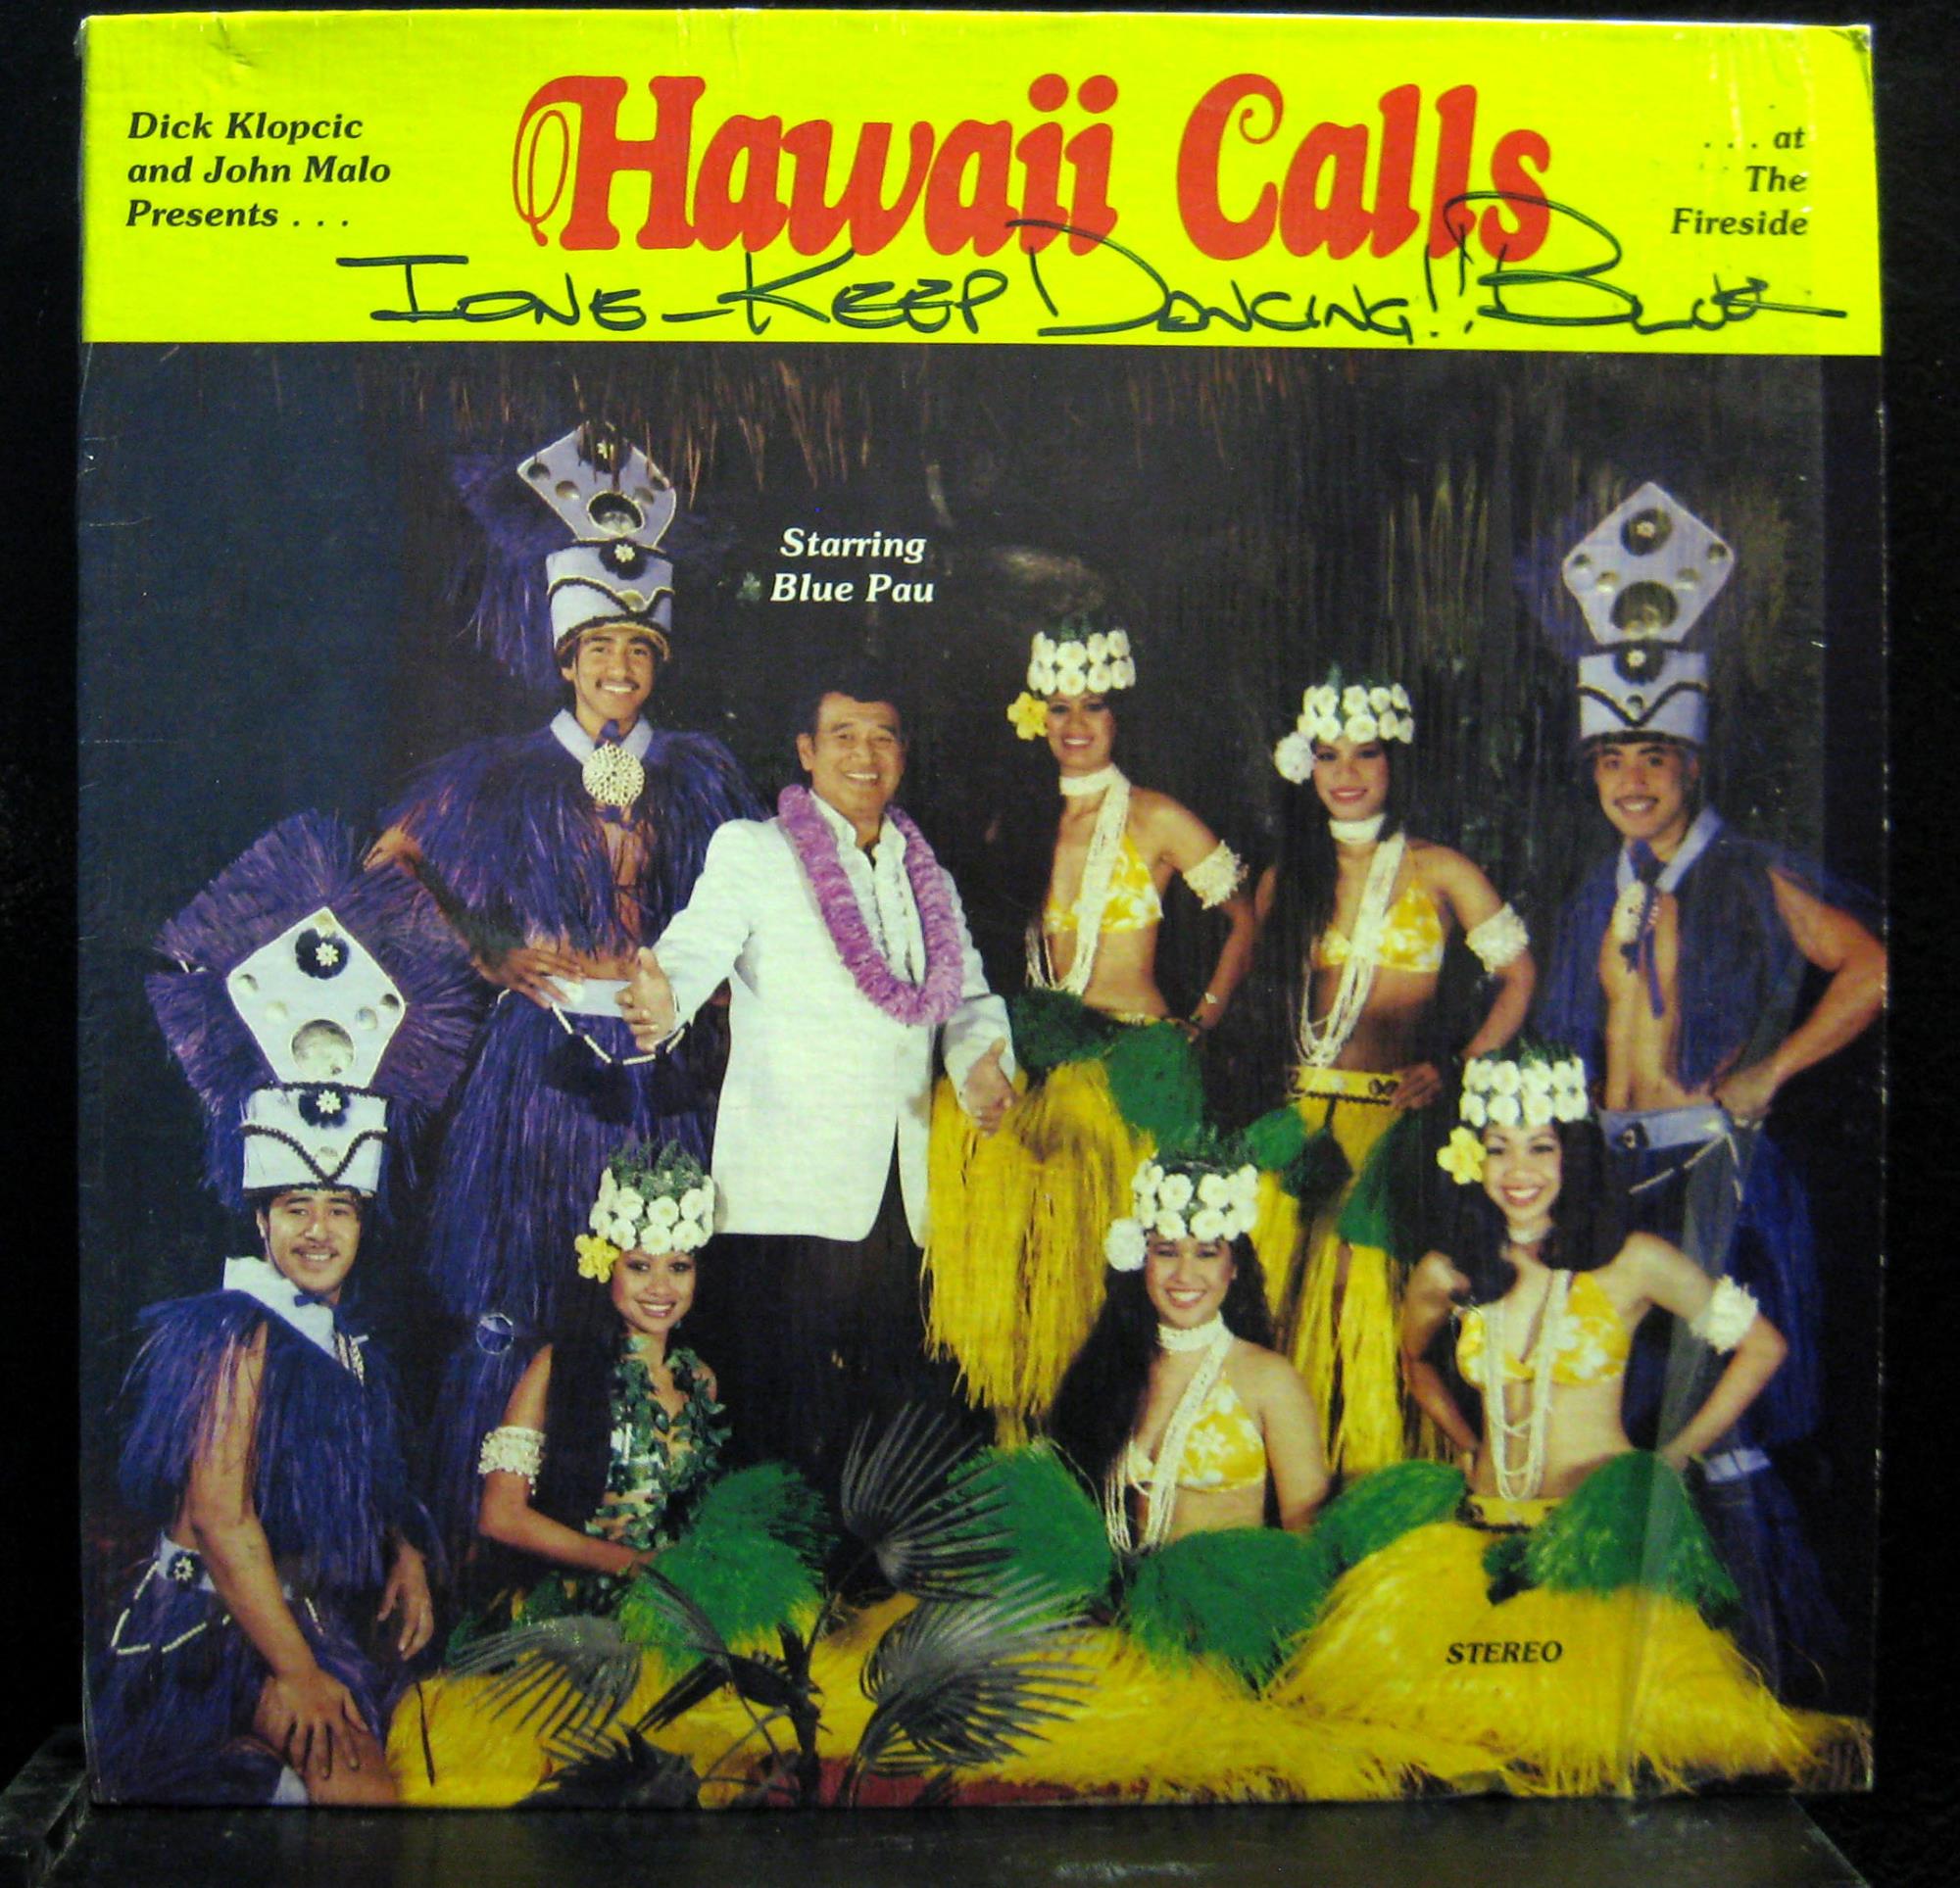 Dick Klopcic & John Malo - Hawaii Calls At The Fireside LP VG+ NR15812 Vinyl